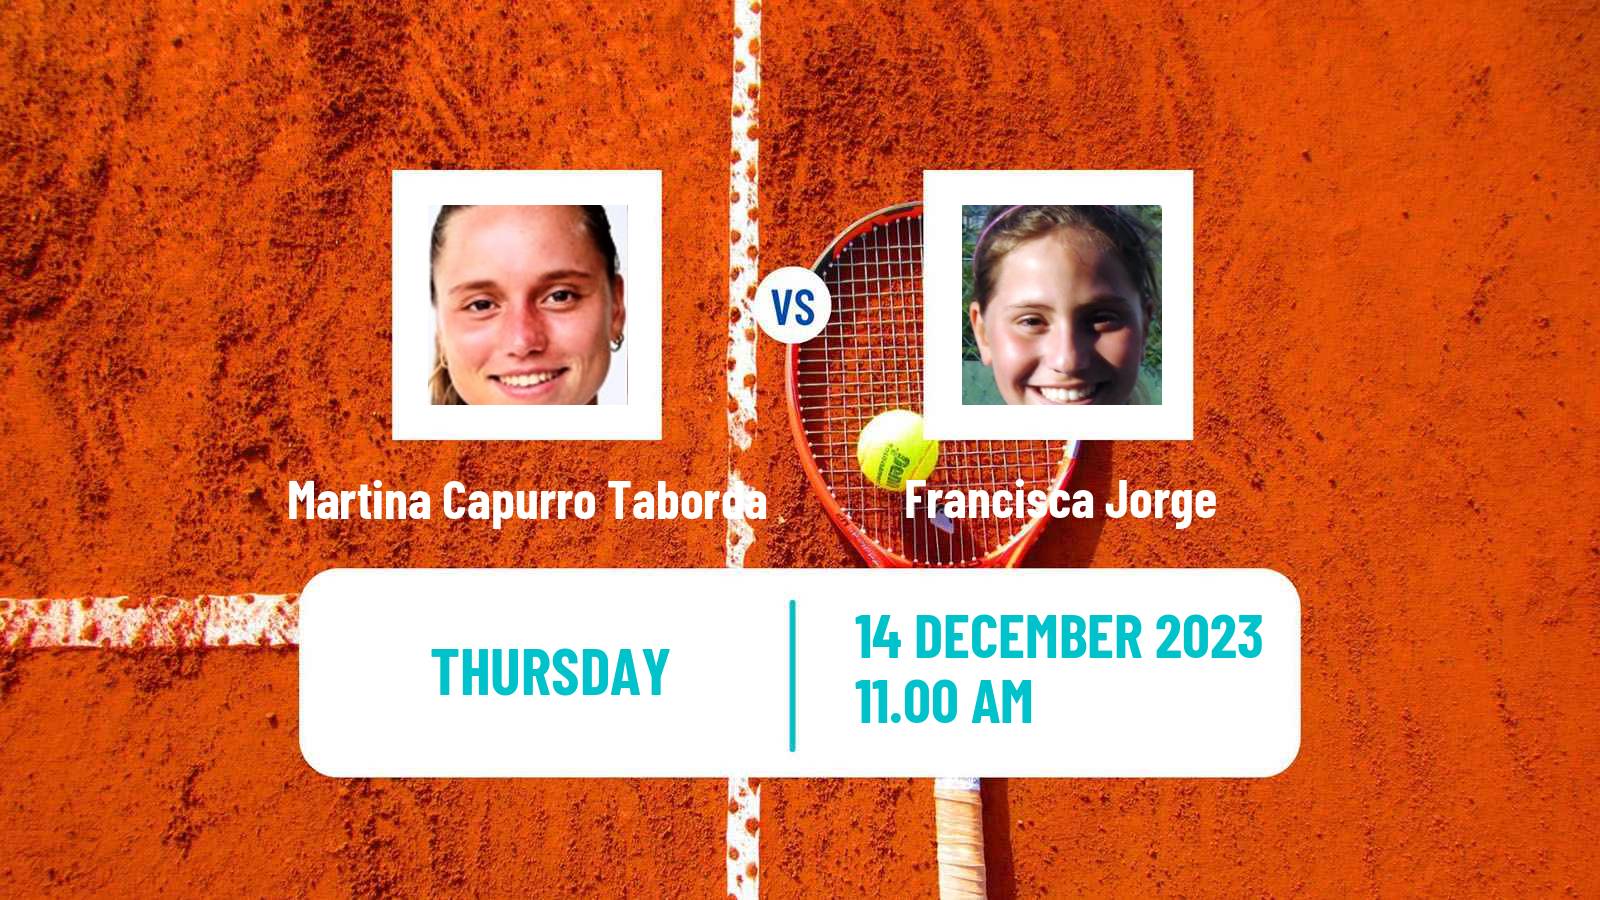 Tennis ITF W60 Vacaria Women Martina Capurro Taborda - Francisca Jorge